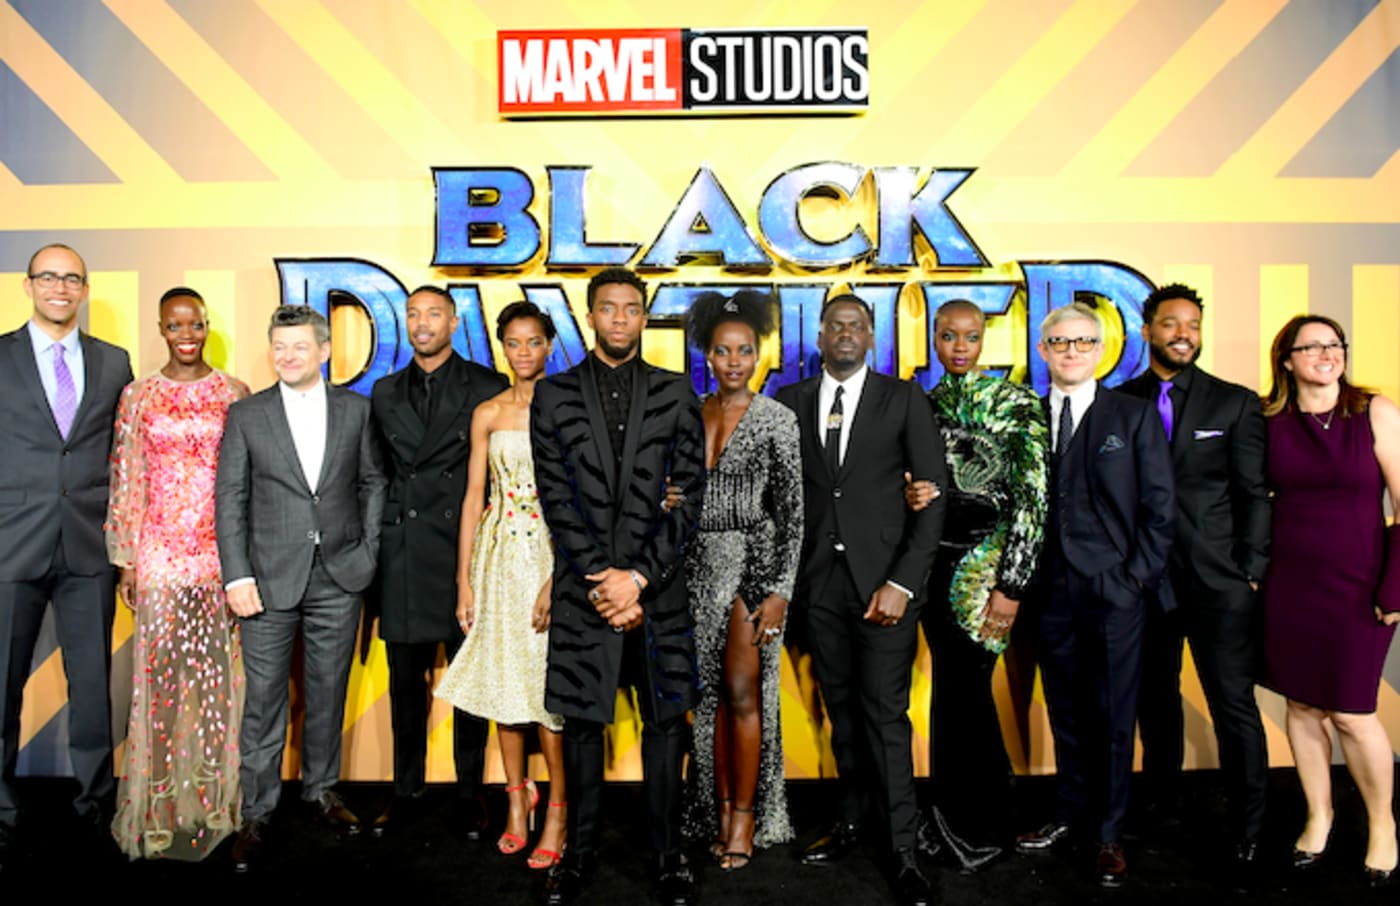 'Black Panther' cast